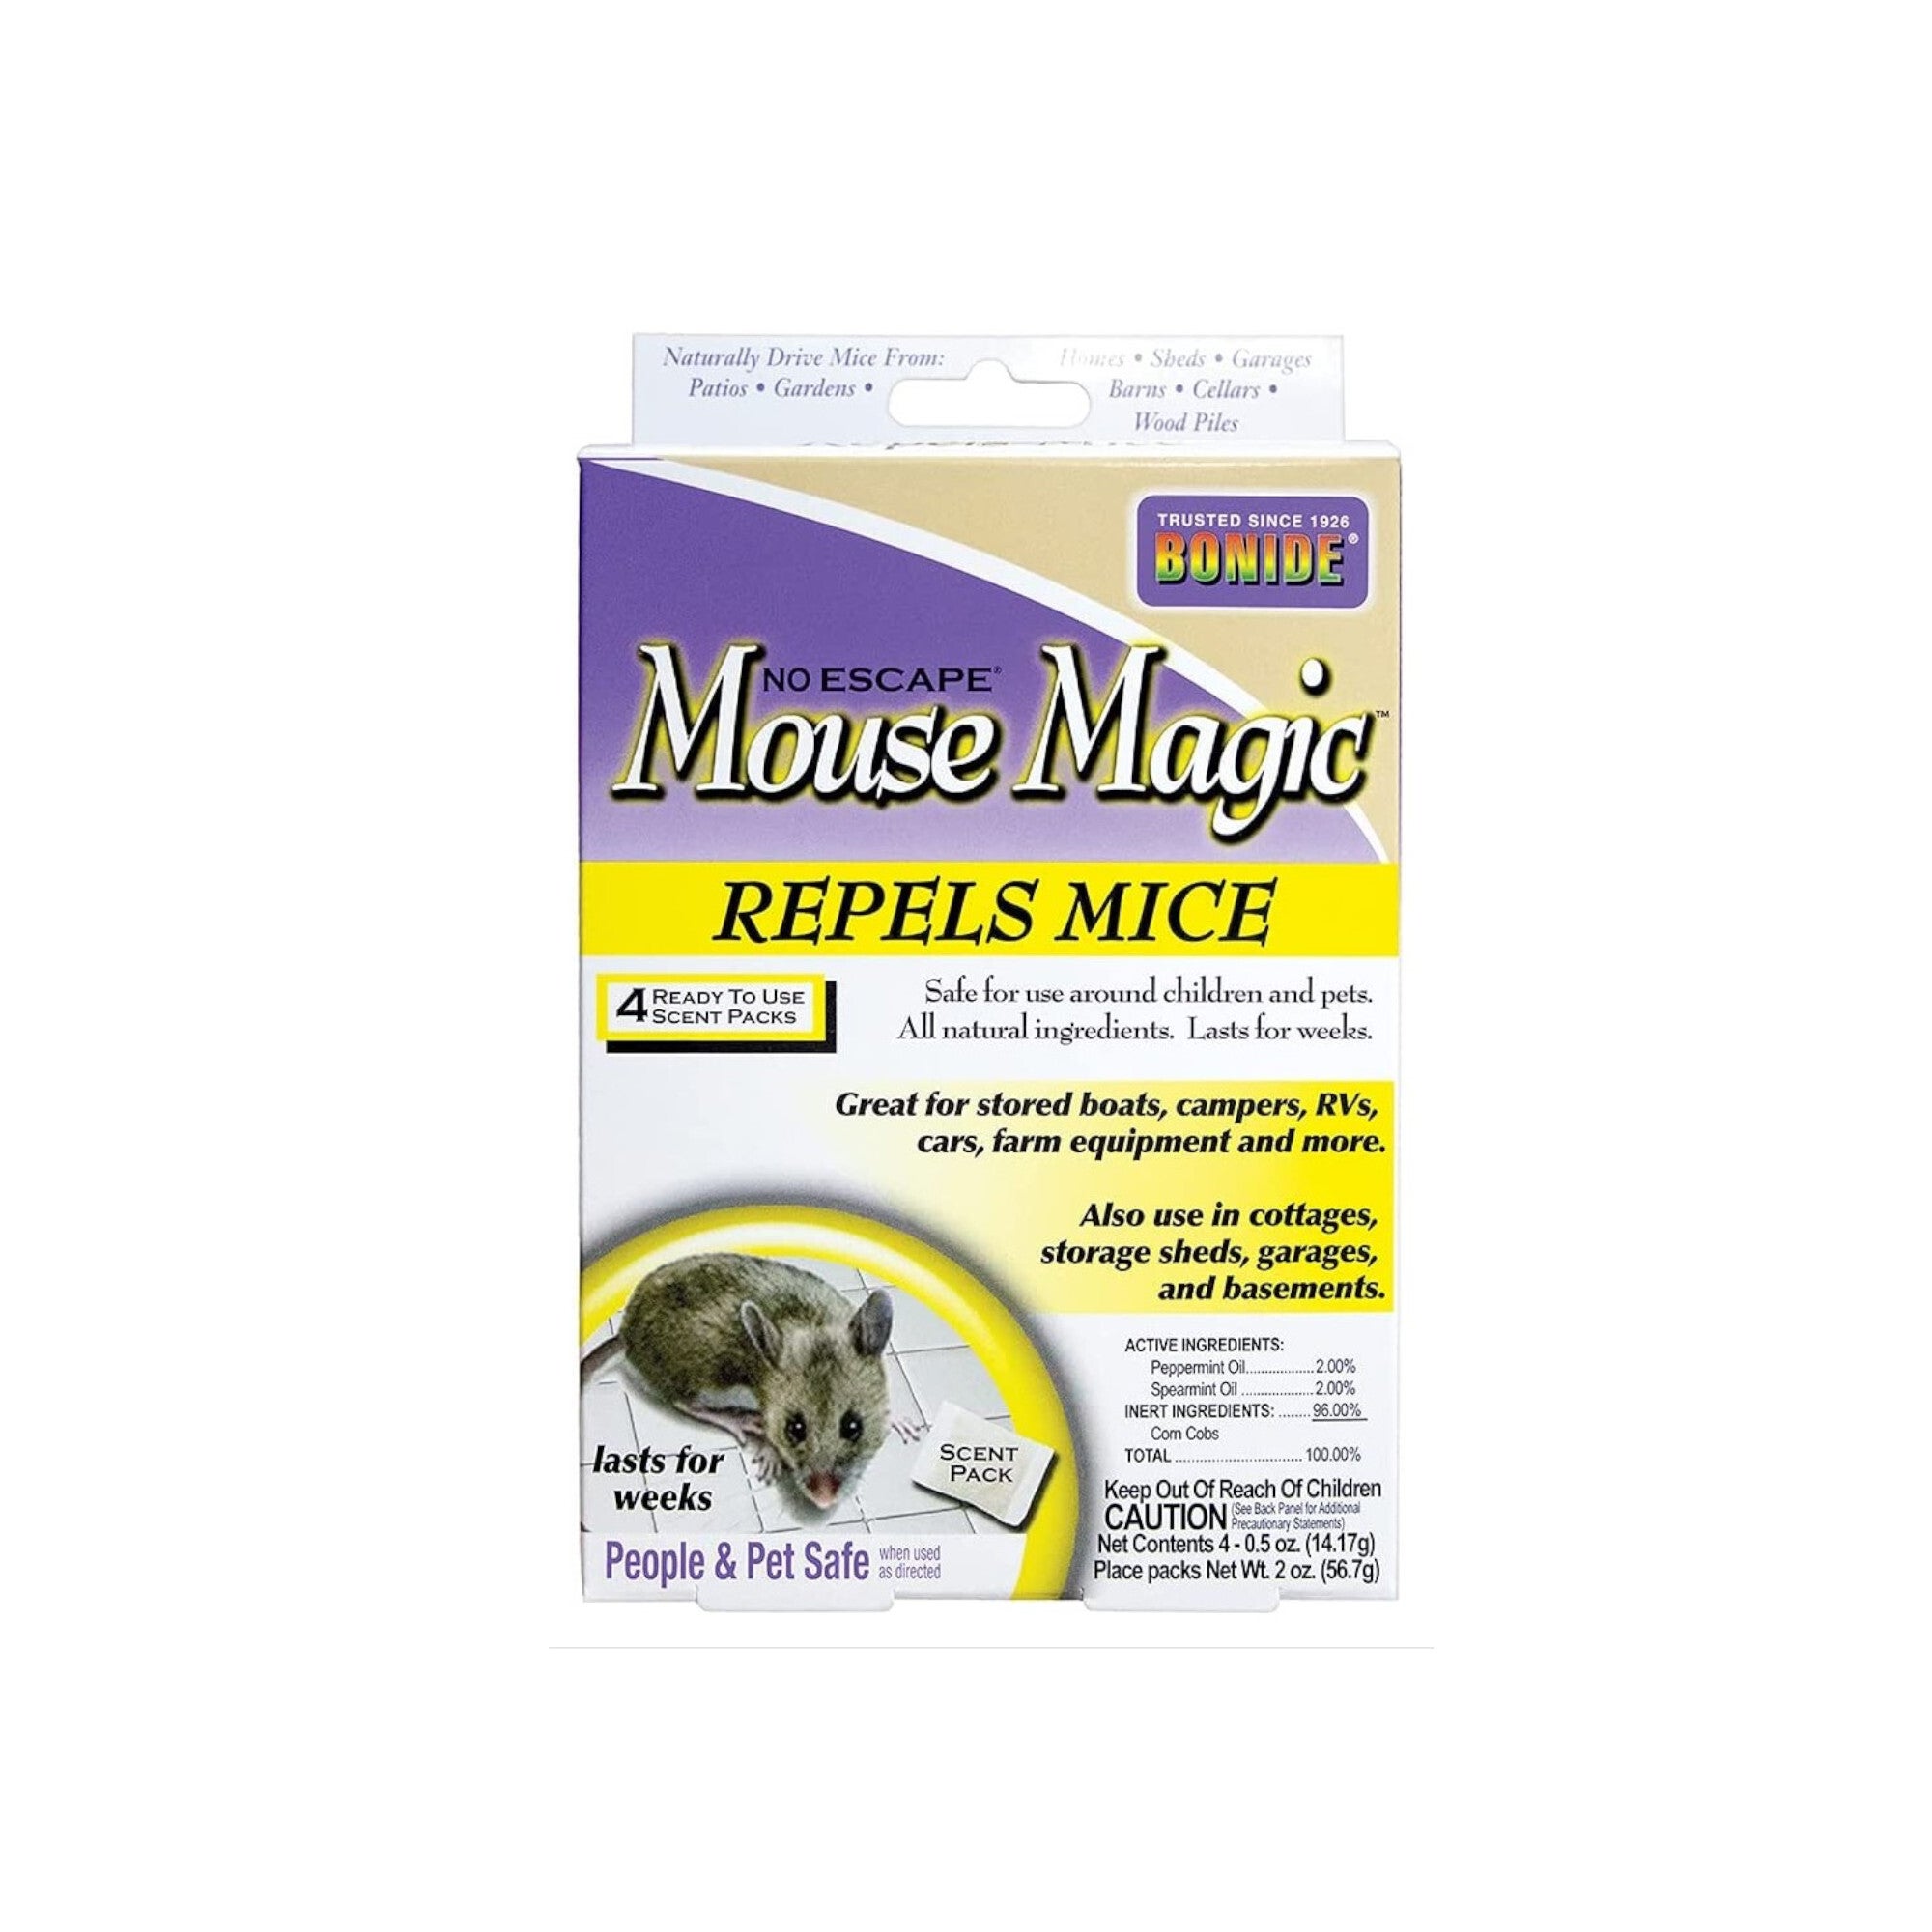 Mouse Magic Repellent - Natural Peppermint Mouse Repellent by Bonide